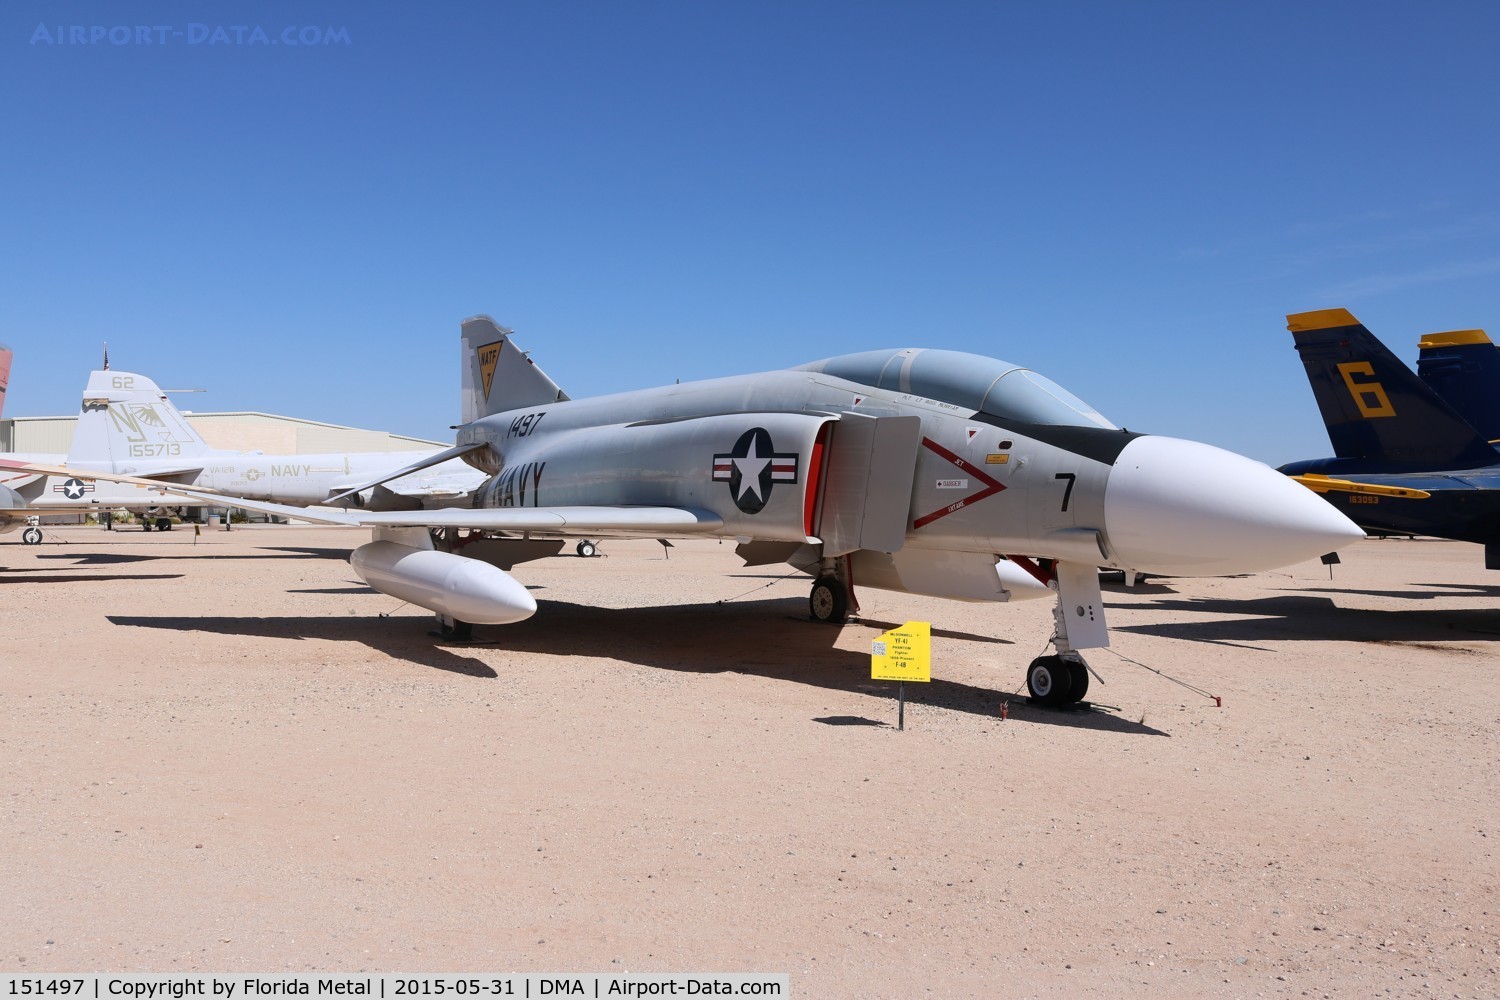 151497, 1964 McDonnell YF-4J Phantom II C/N 655, YF-4J